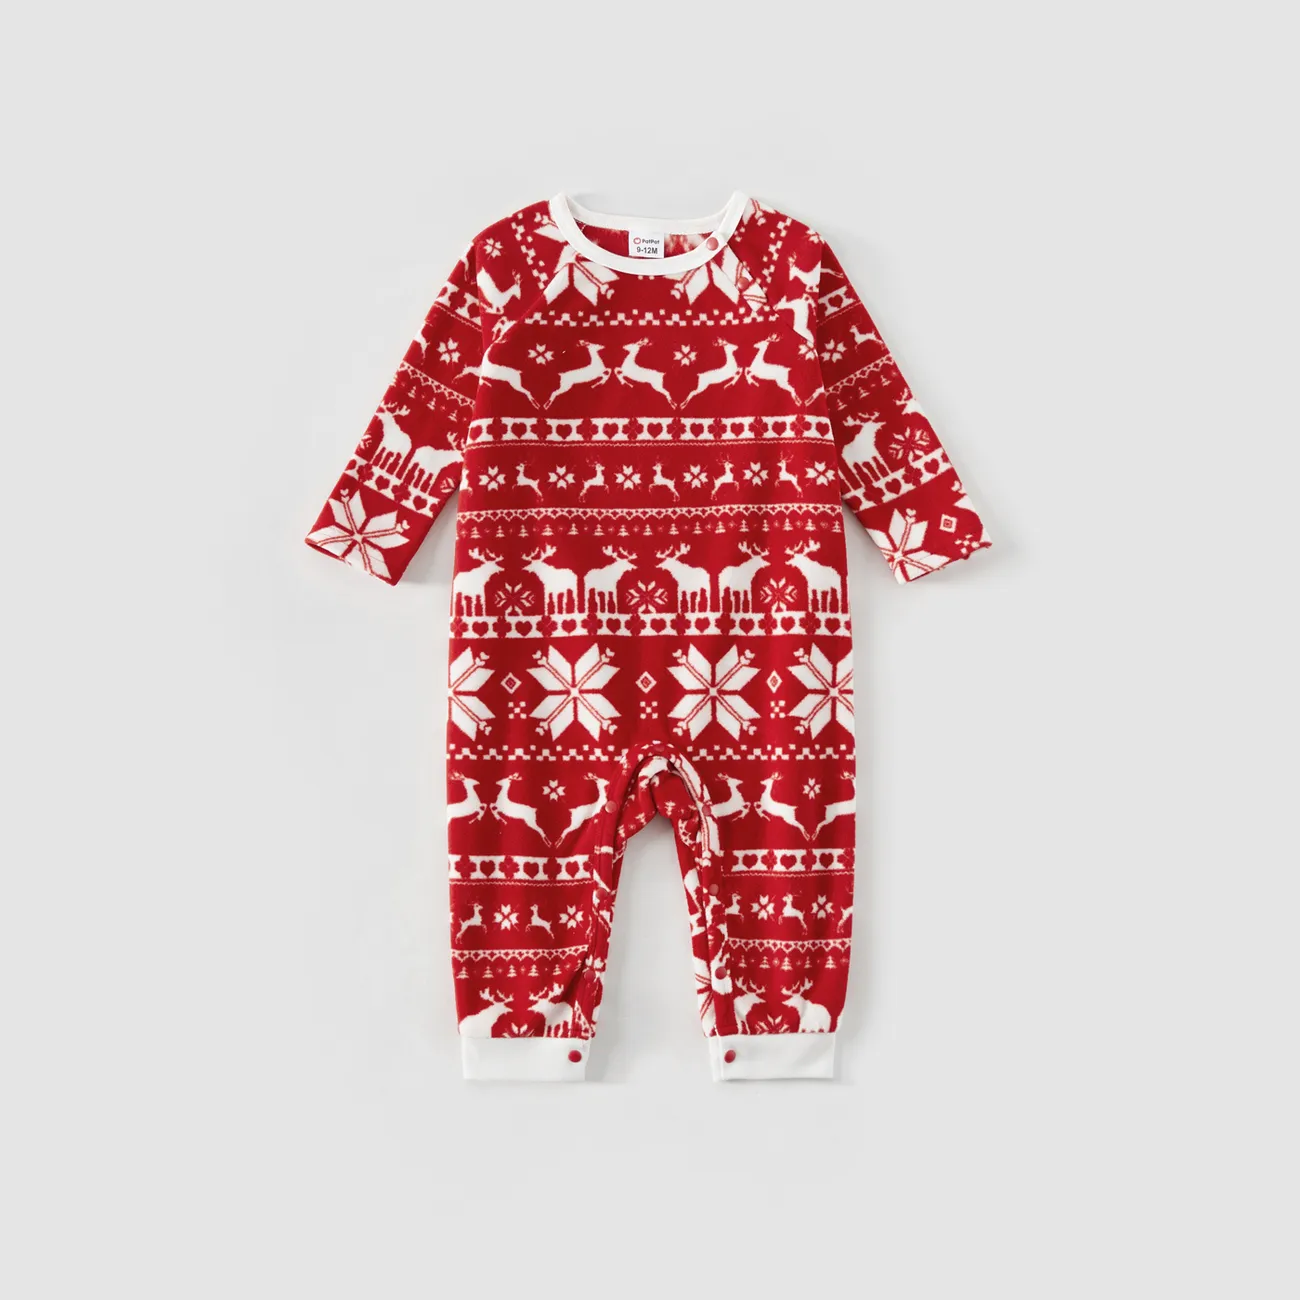 PATPAT Family Matching Christmas Pajamas Tree Snowflake and Letters Print  Sleepwear Long-sleeve Pajamas Sets Family Xmas Outfits Kids 6-7 Years  Redblack